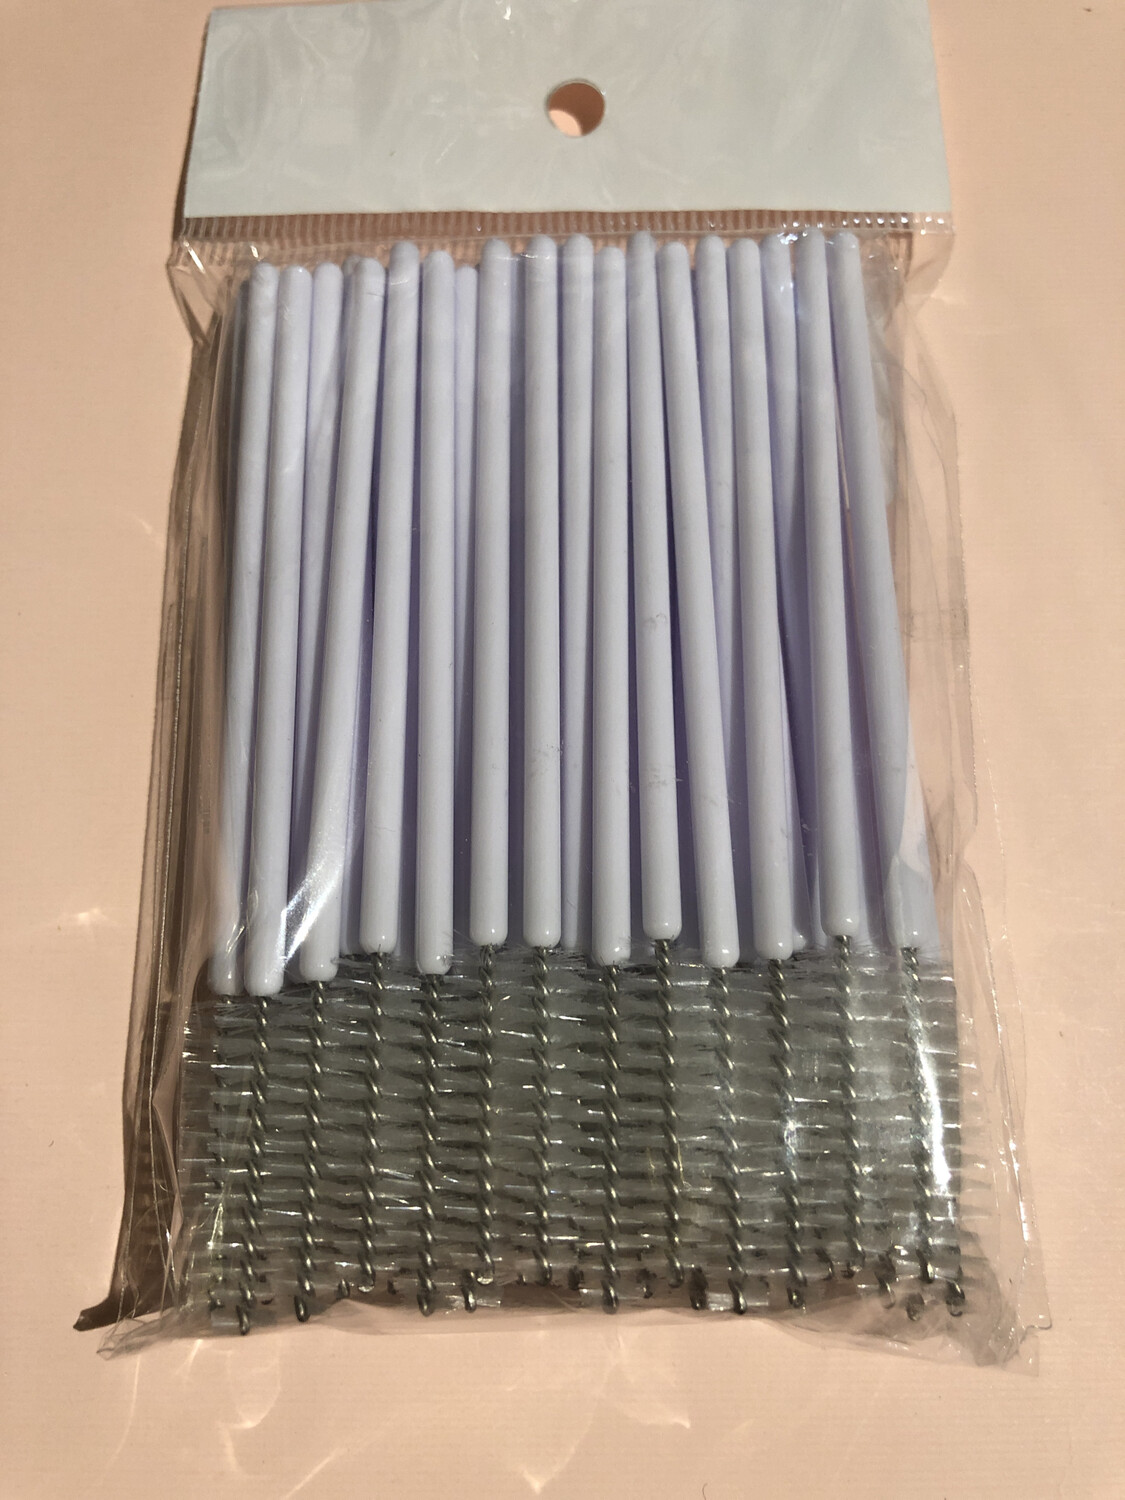 50pcs Disposable Mascara Wands Makeup Brushes Eyelash Eye Lash Brush Make Up Applicators Kit ( White )